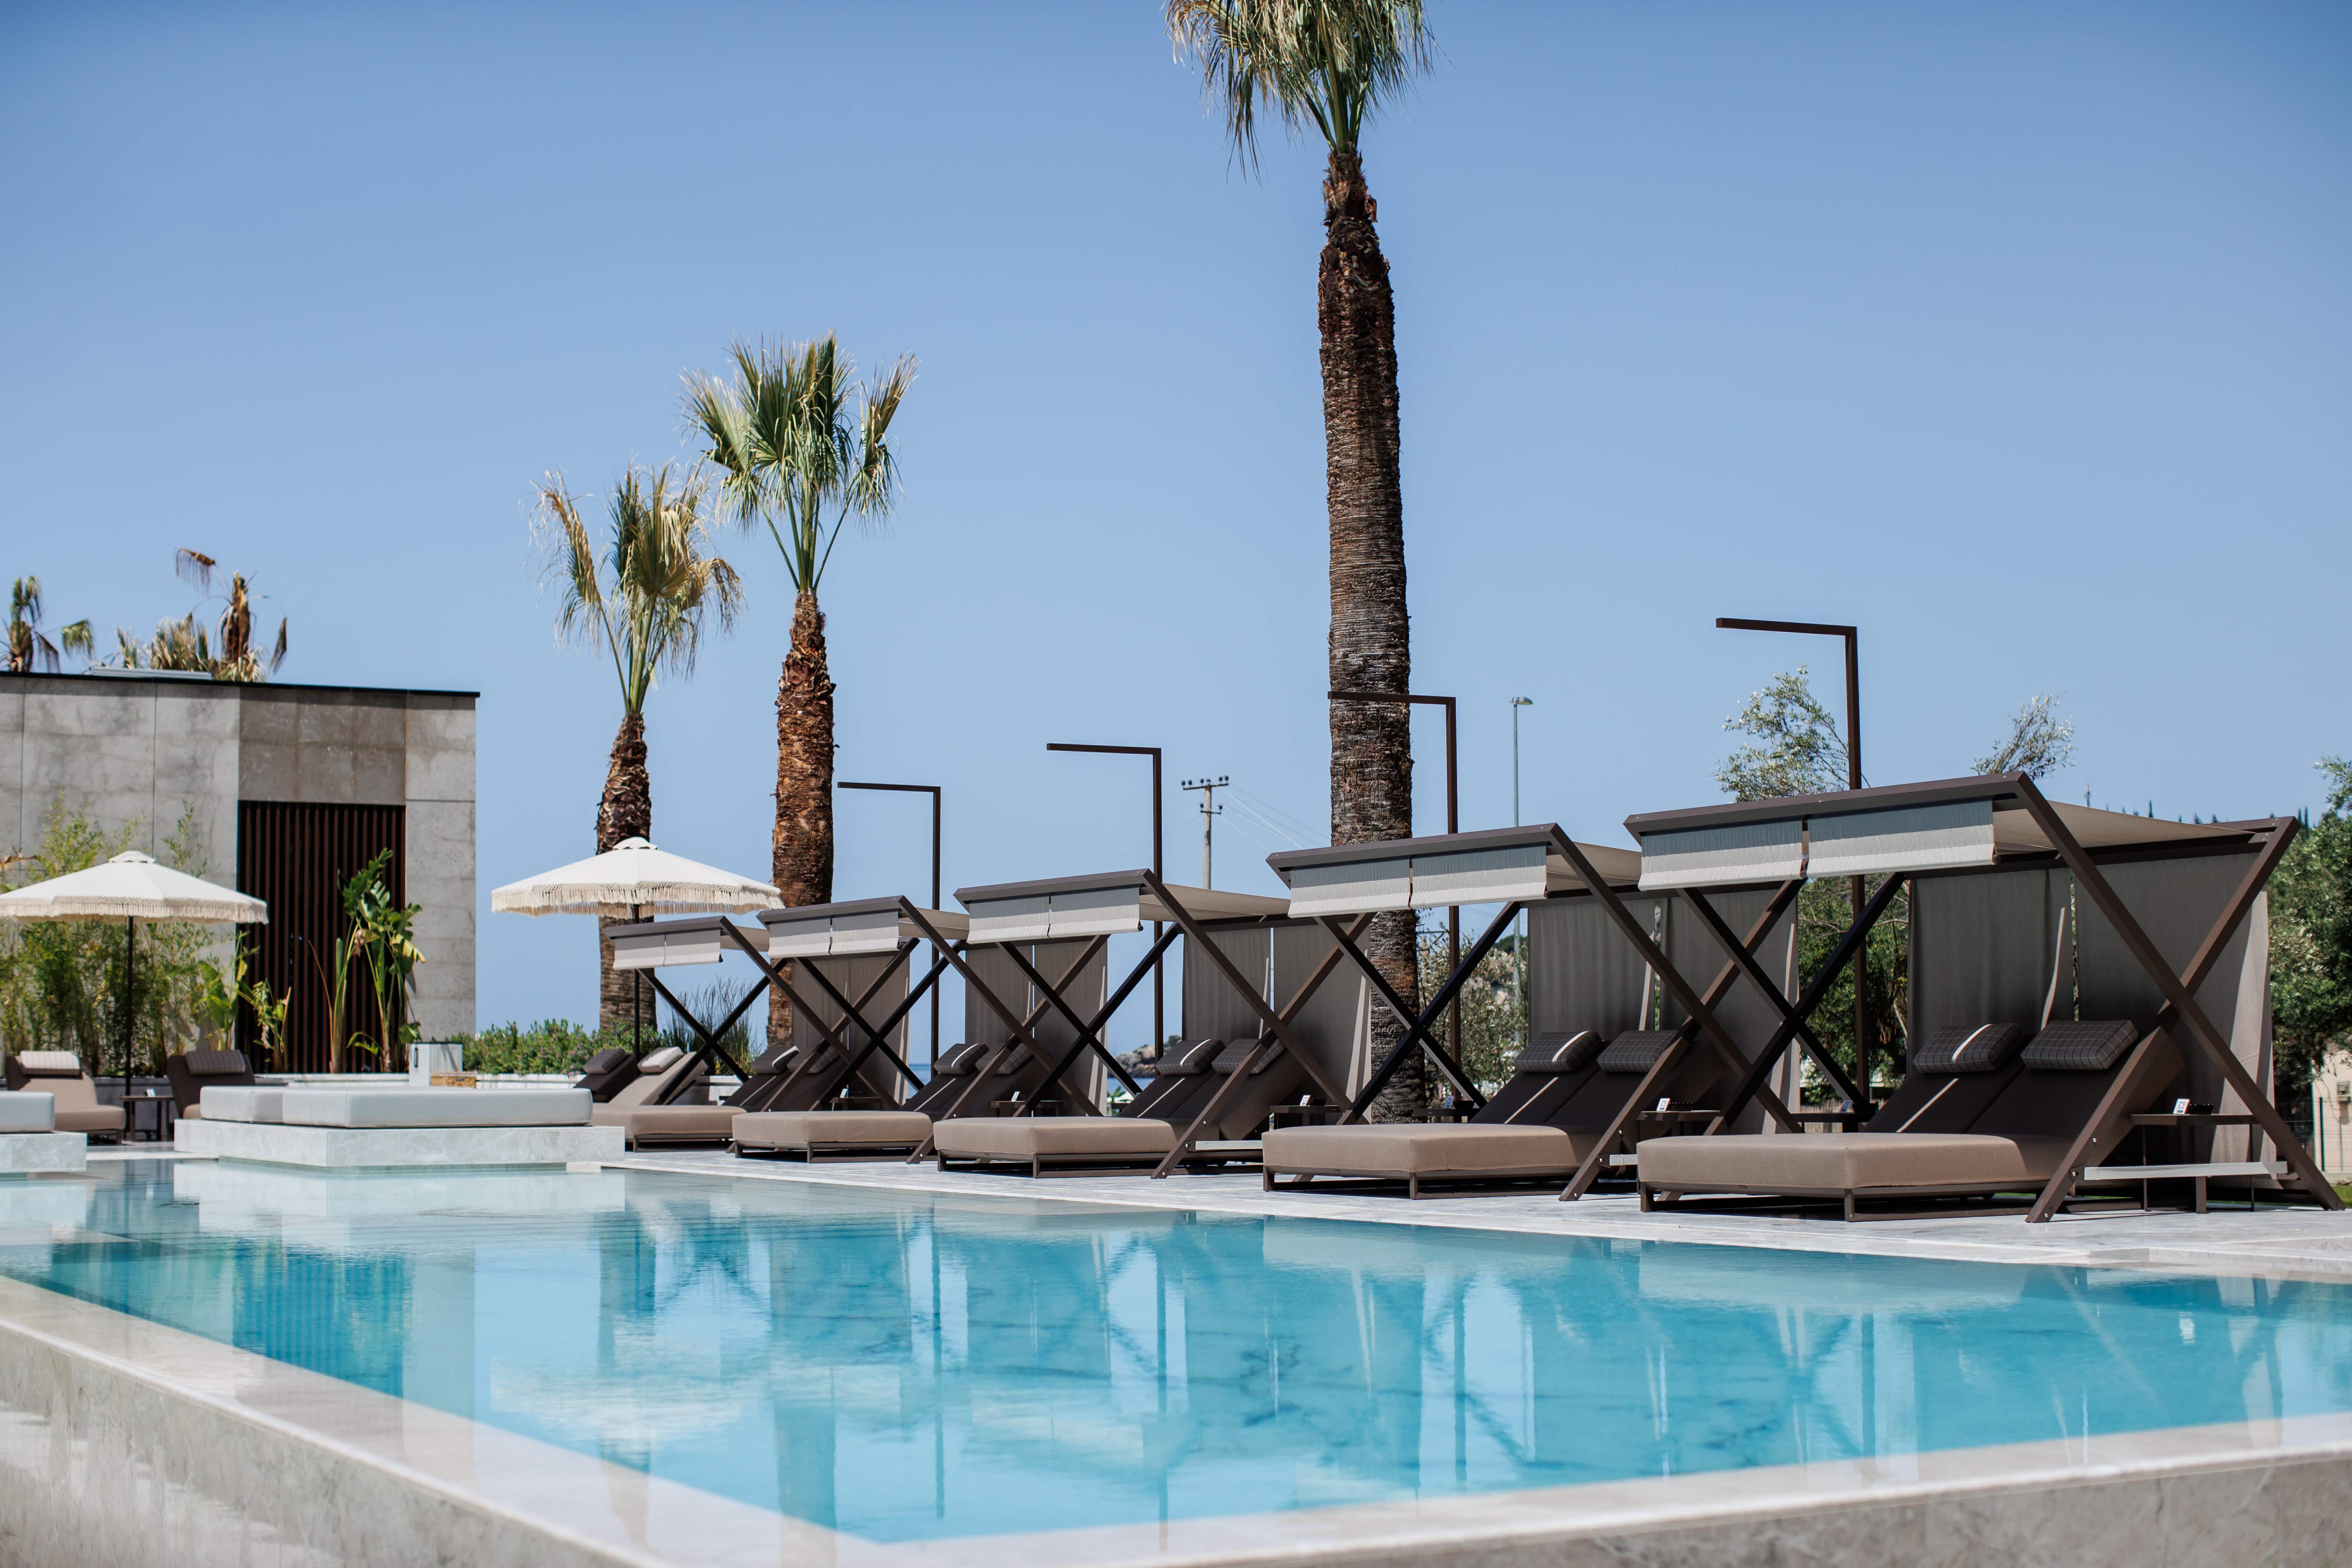 prado_luxury_hotel_pool_side_view